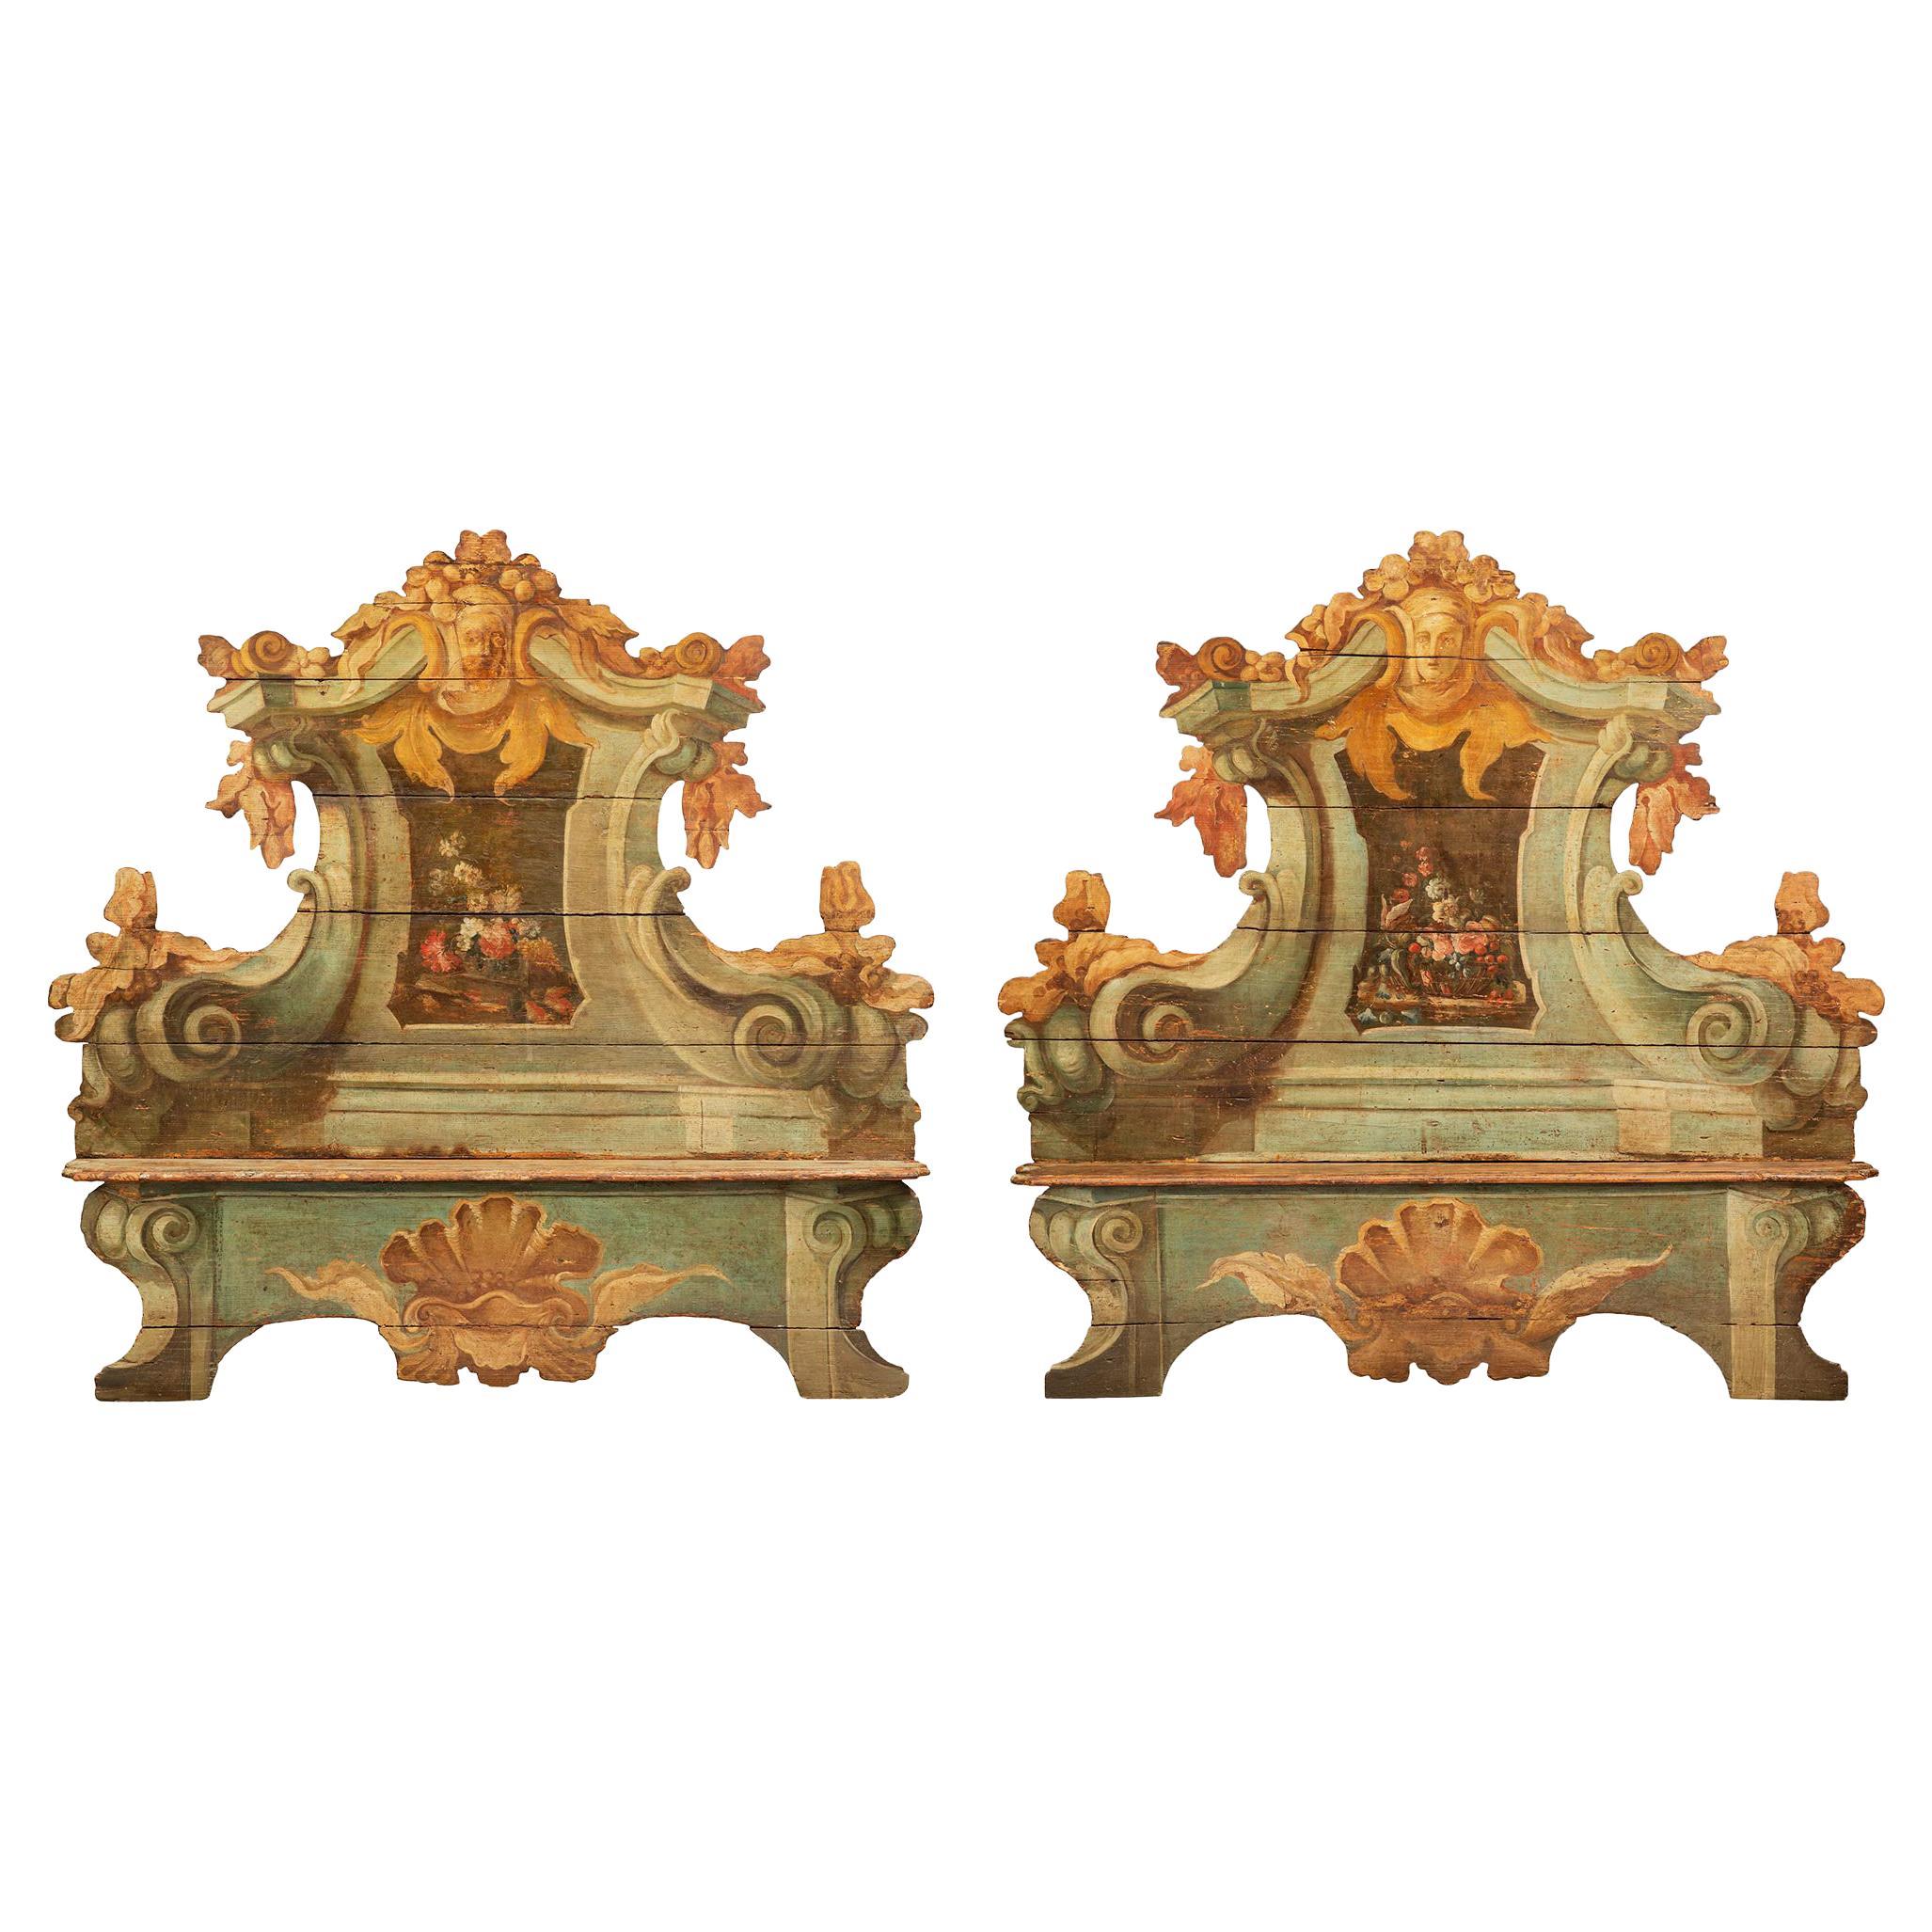 Pair of Italian 18th Century Baroque Cassapanca Polychrome Benches